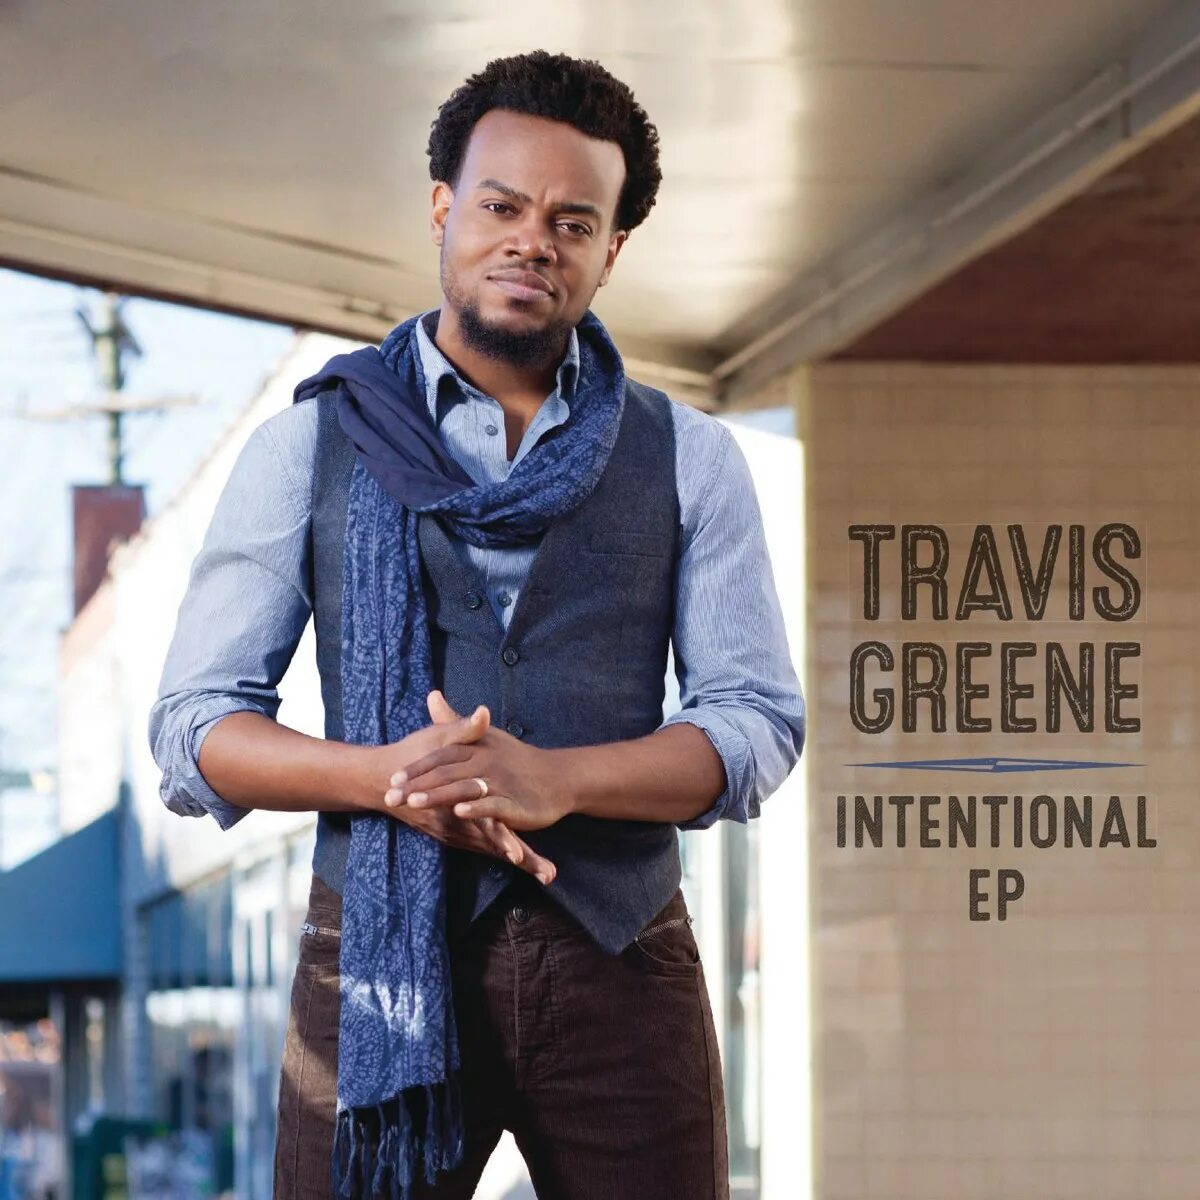 Travis Greene. Les Greene певец. Трэвис Грин. Travis Greene intentional Sheet Music.